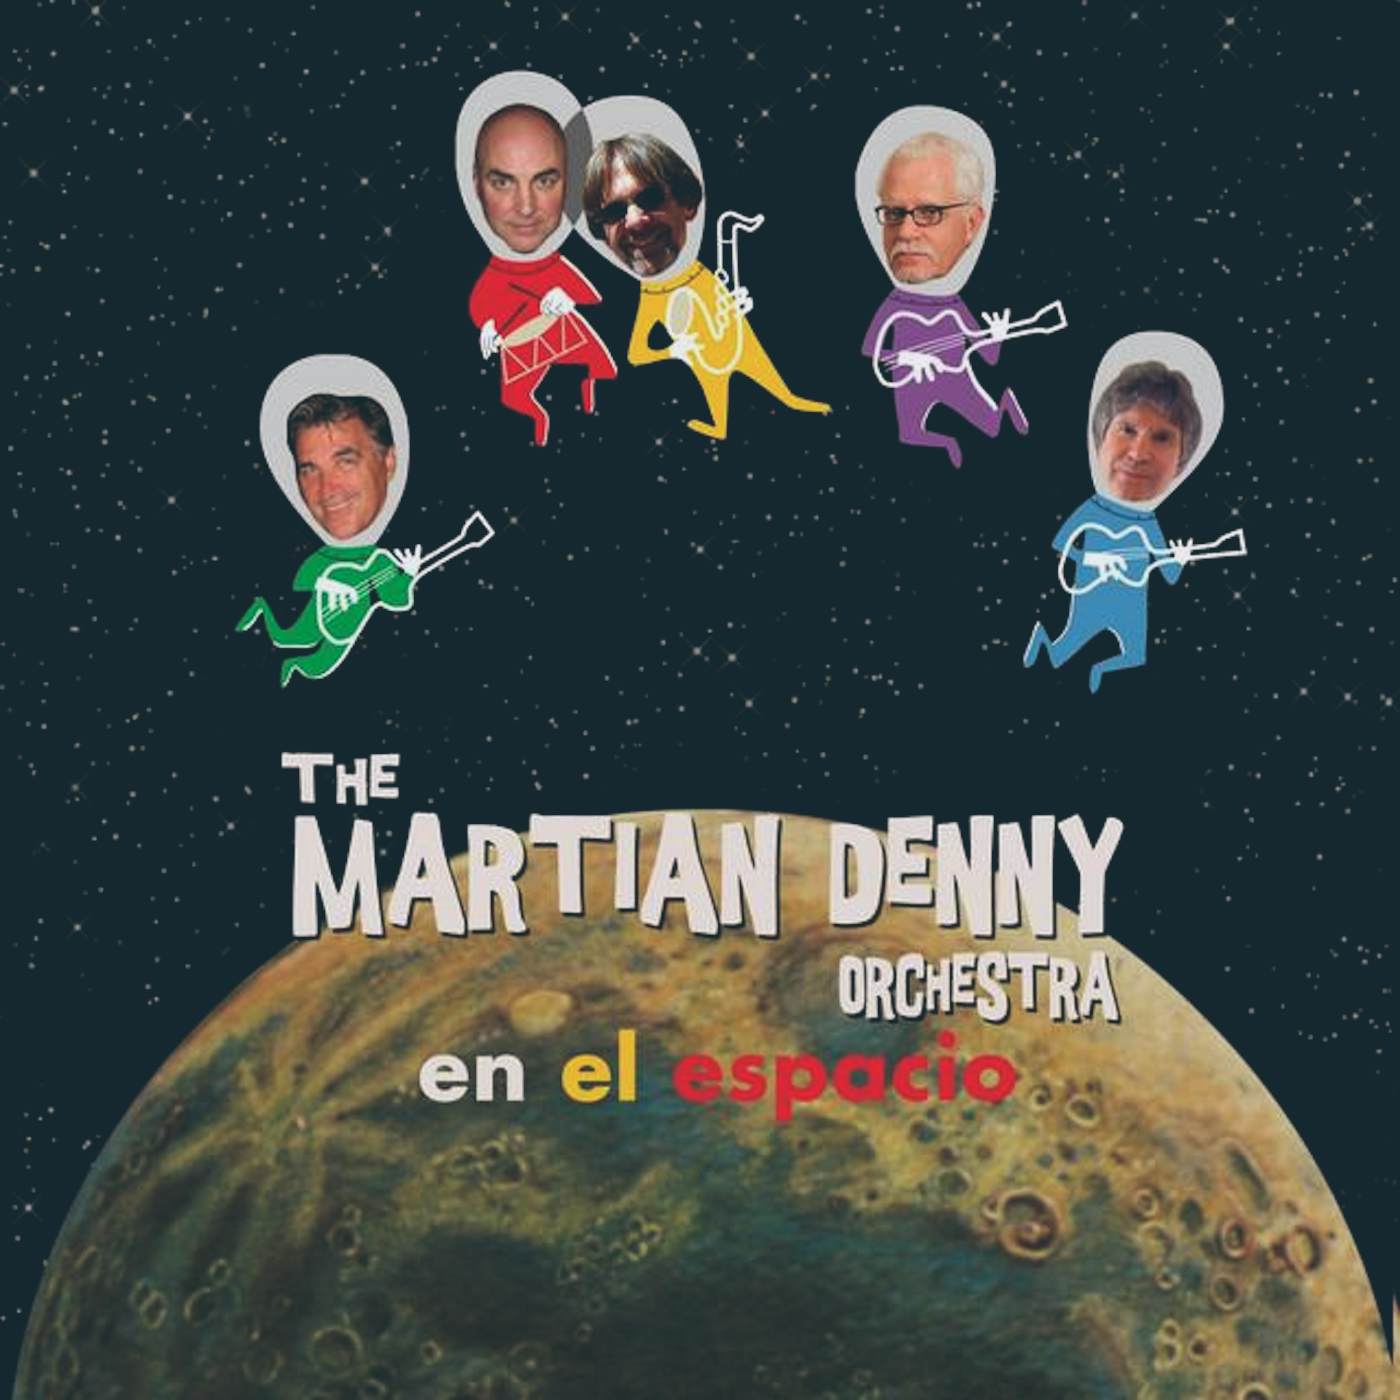 The Martian Denny Orchestra